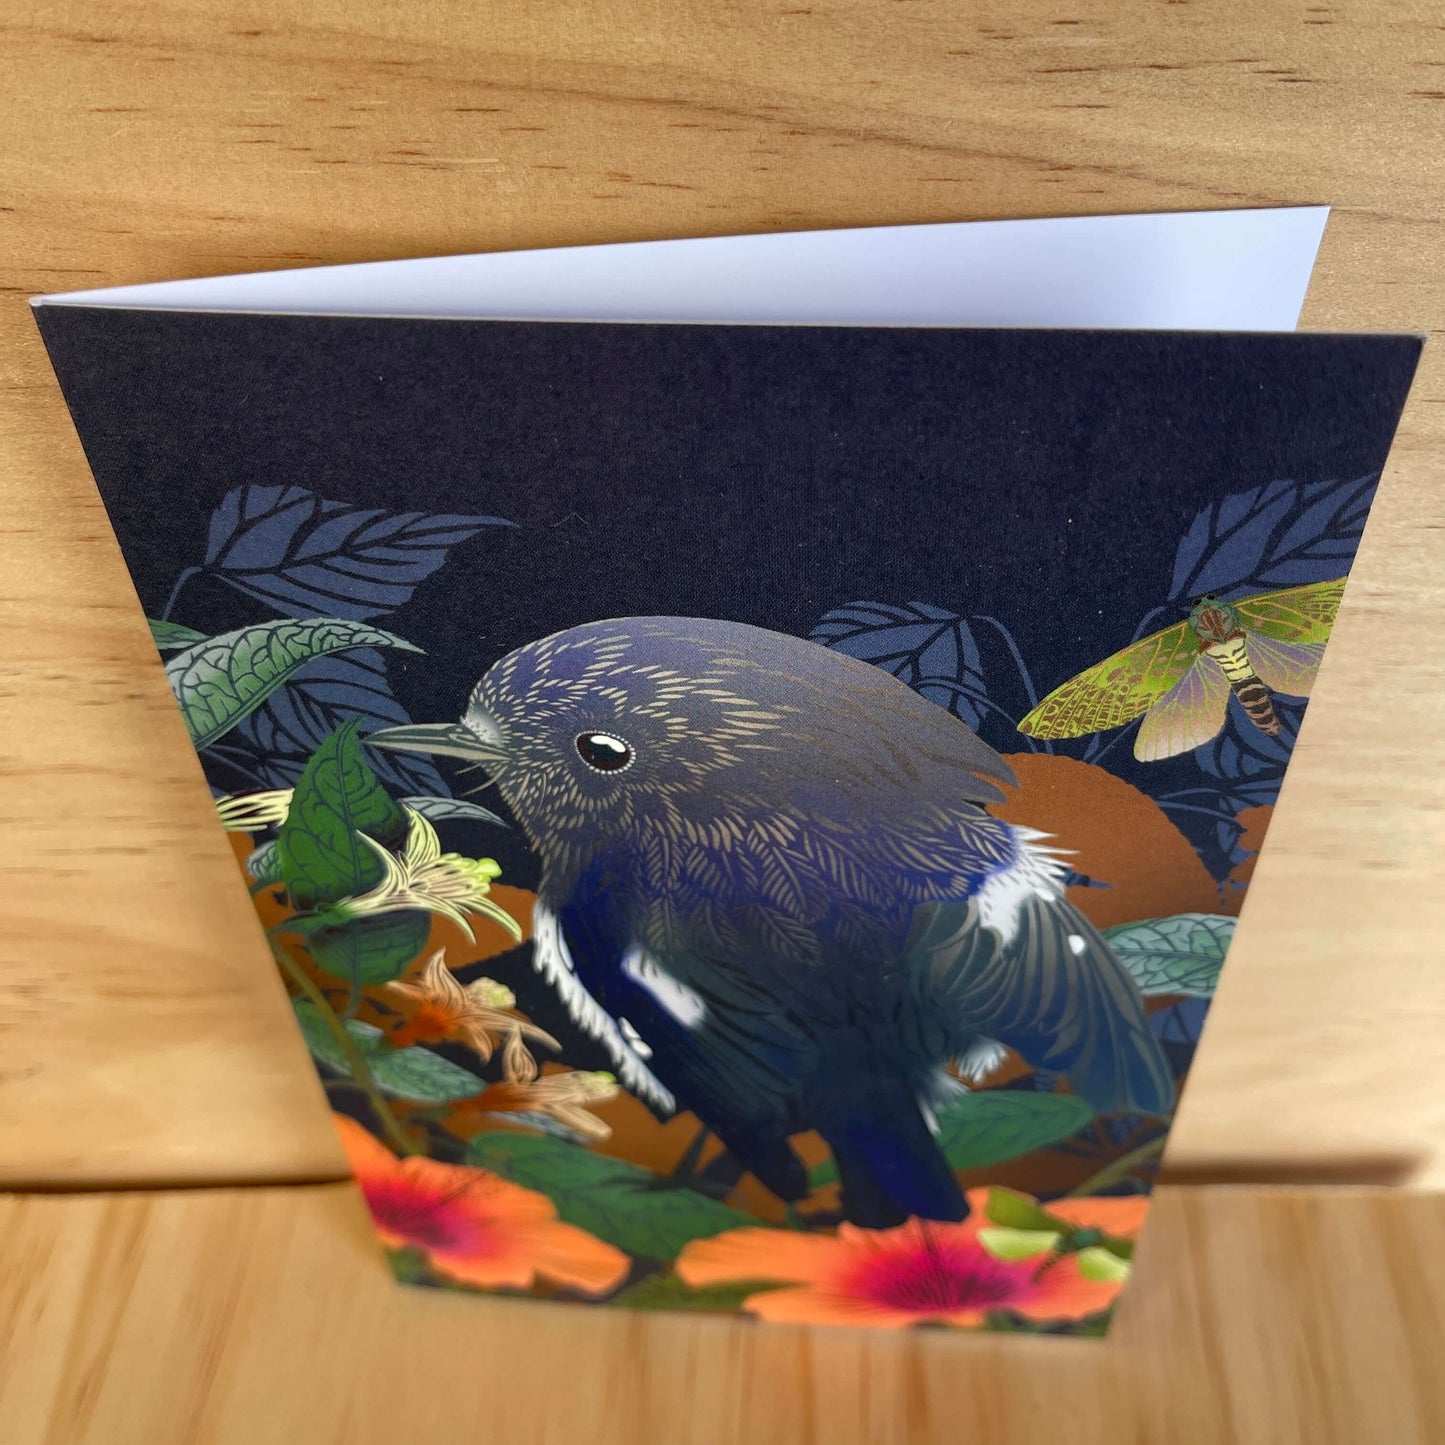 Greeting card by designer Flox featuring a Miromiro bird and Puriri Moth amongst flowers.